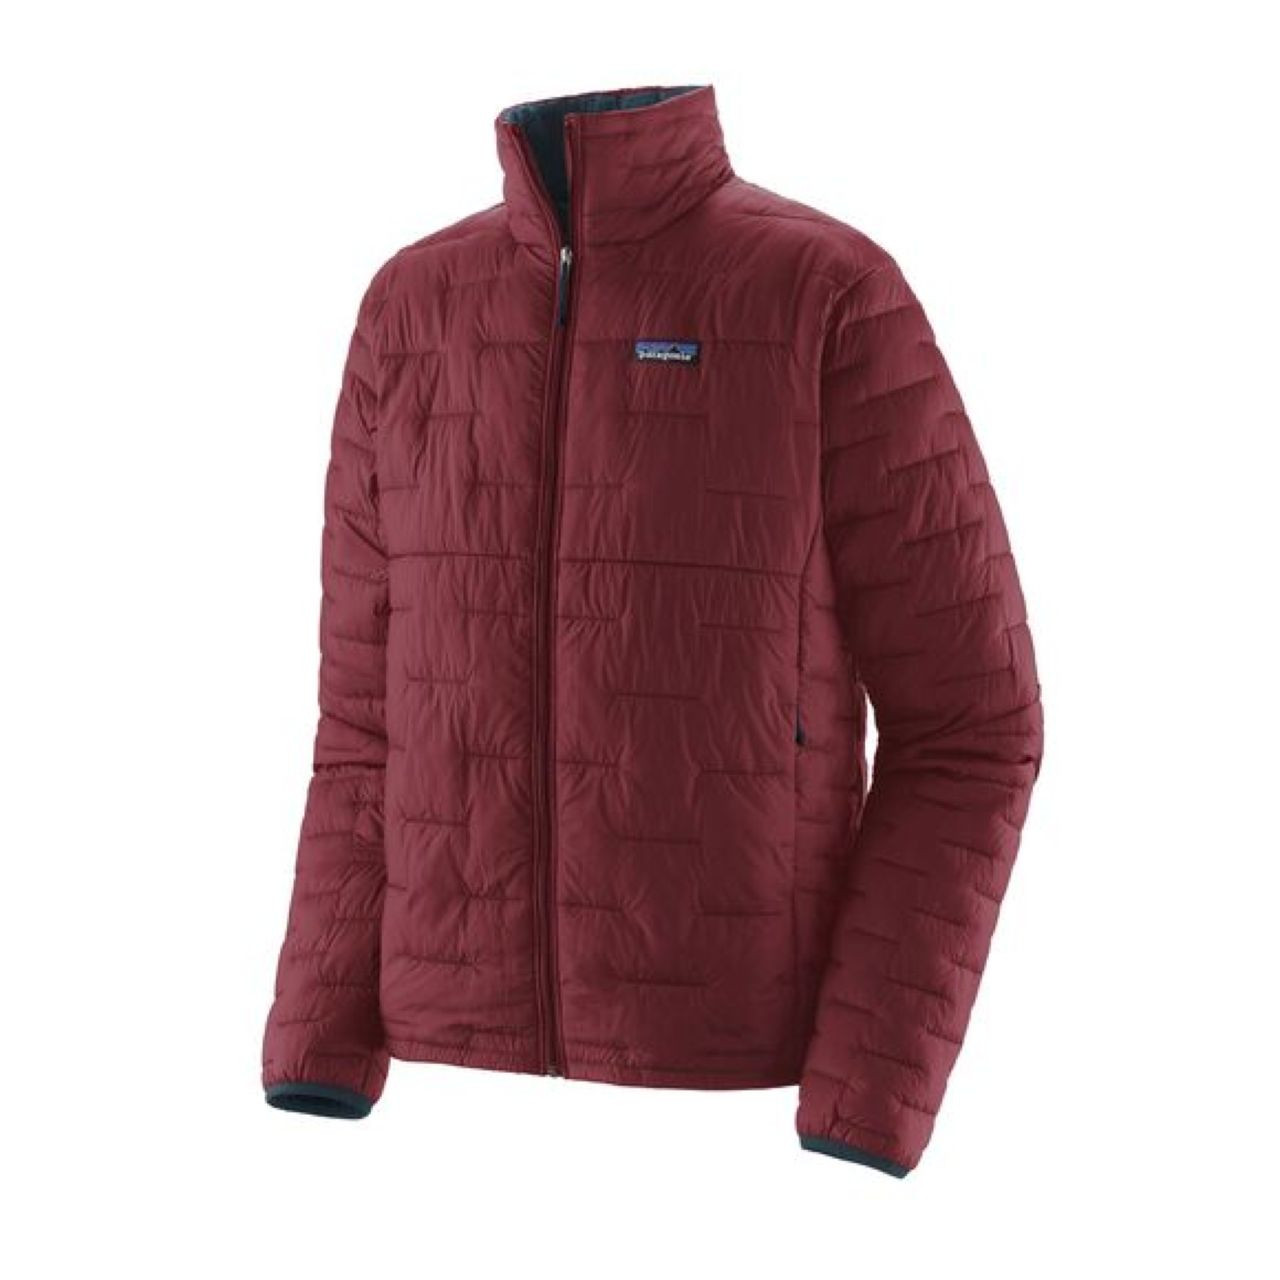 Patagonia Micro Puff Jacket - Men's - Sequoia Red